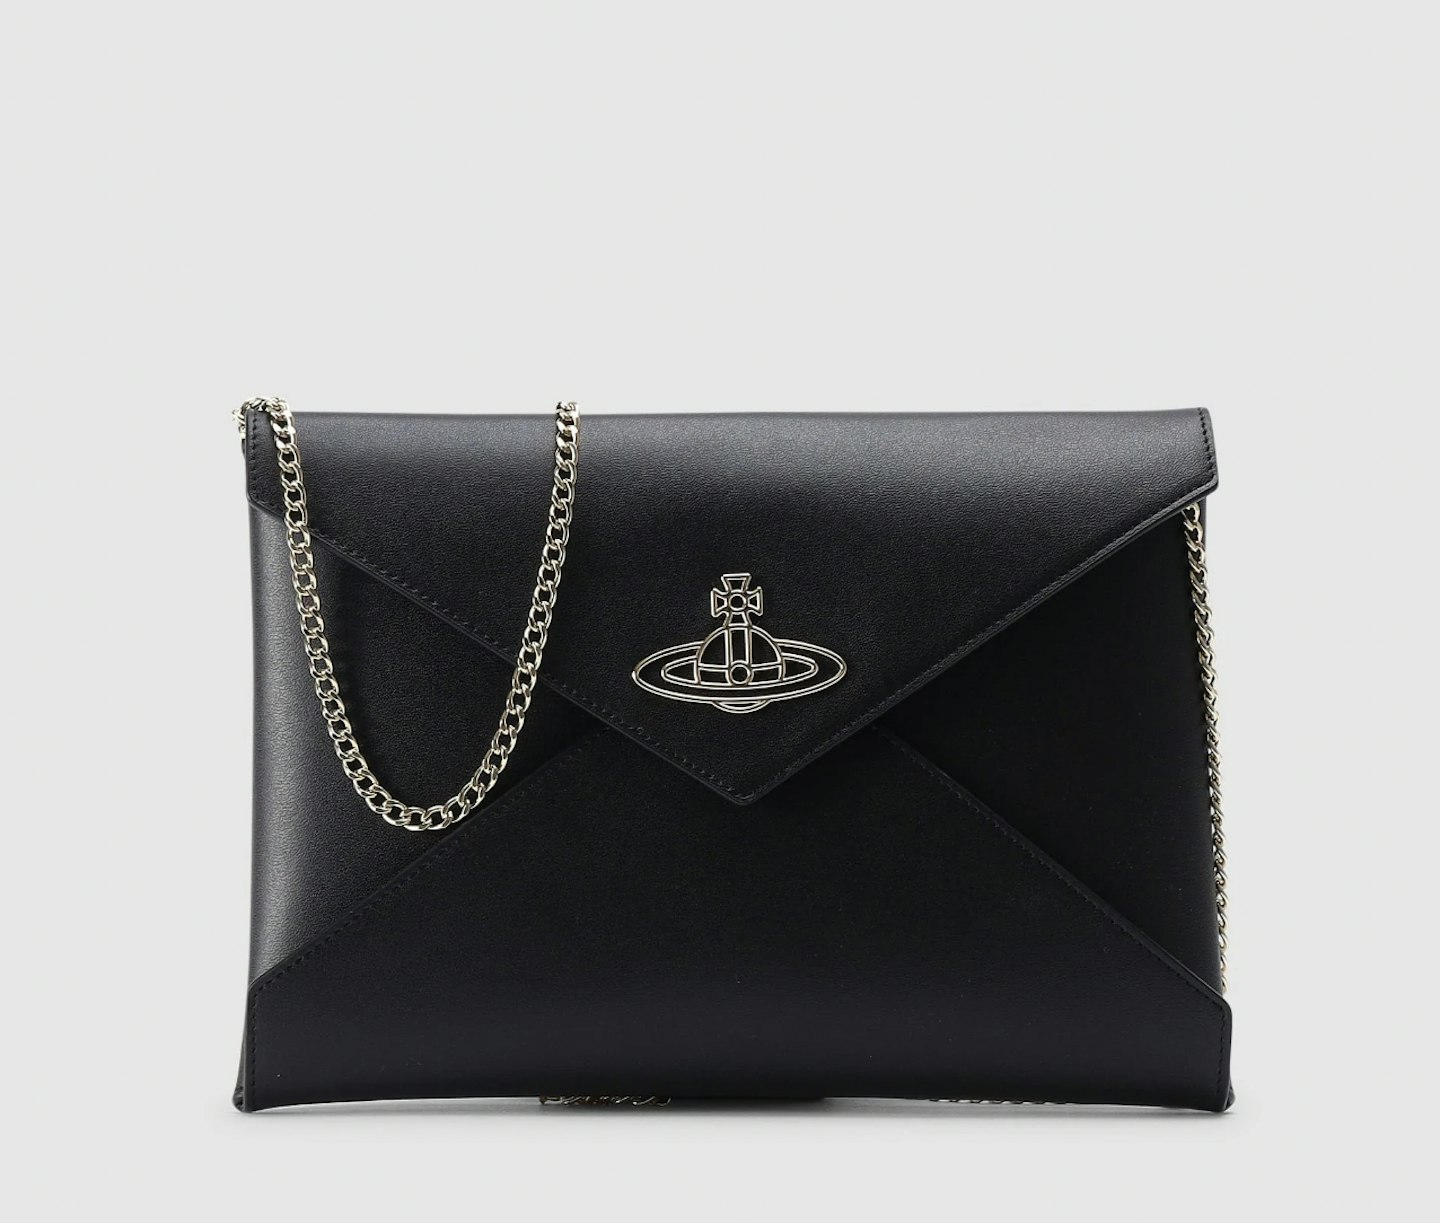   35% off Vivienne Westwood Women's Orb Black Clutch Bag